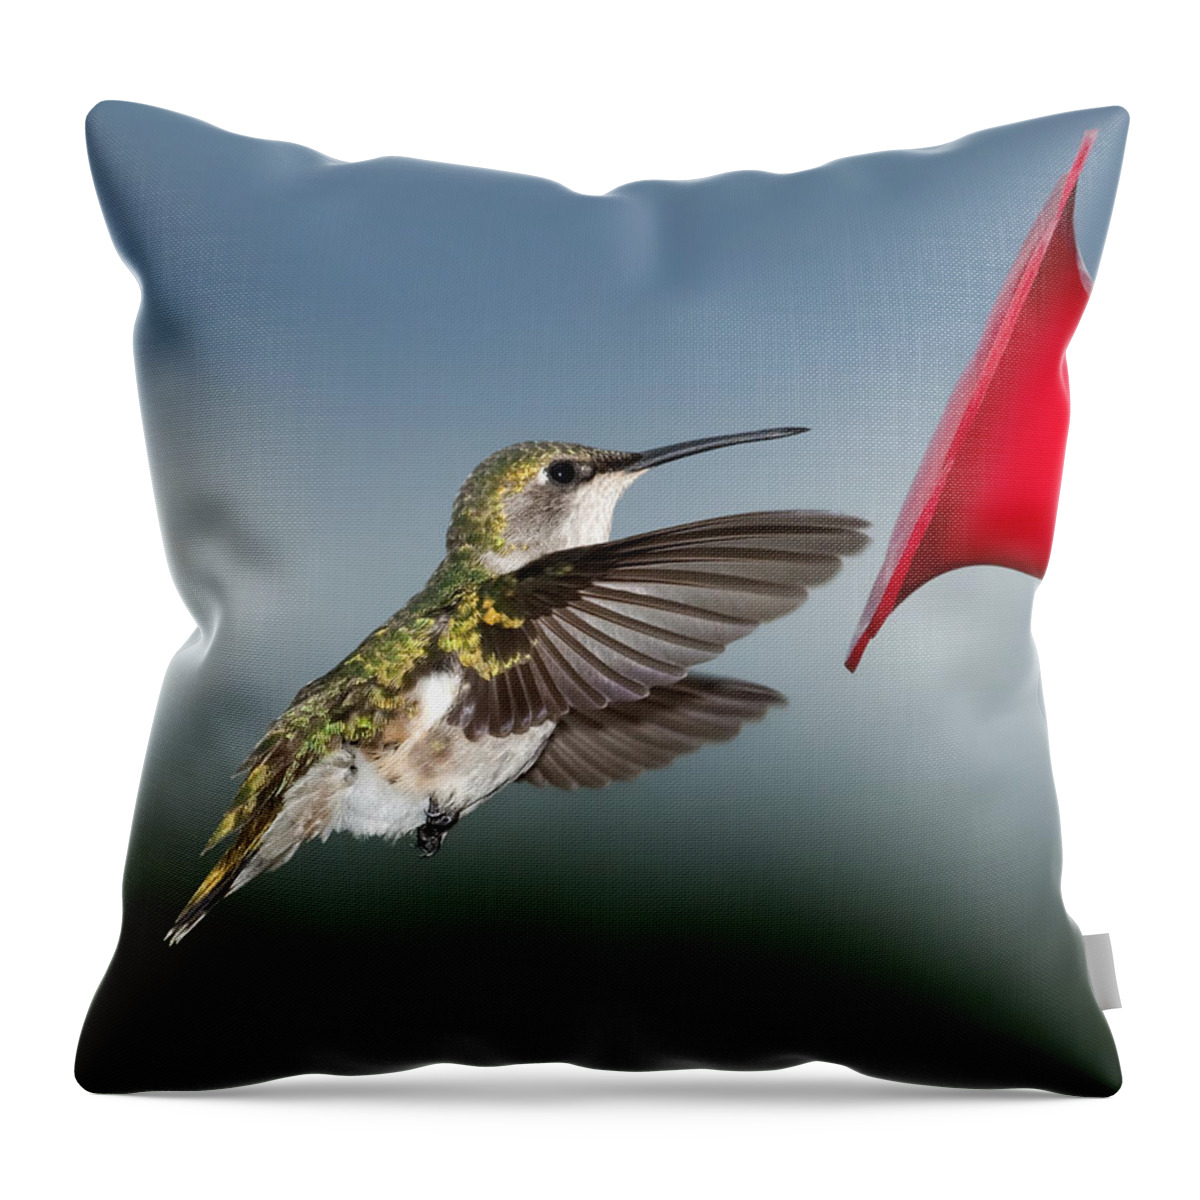 Hummingbird Throw Pillow featuring the photograph Flying Hummingbird close-up by Al Mueller